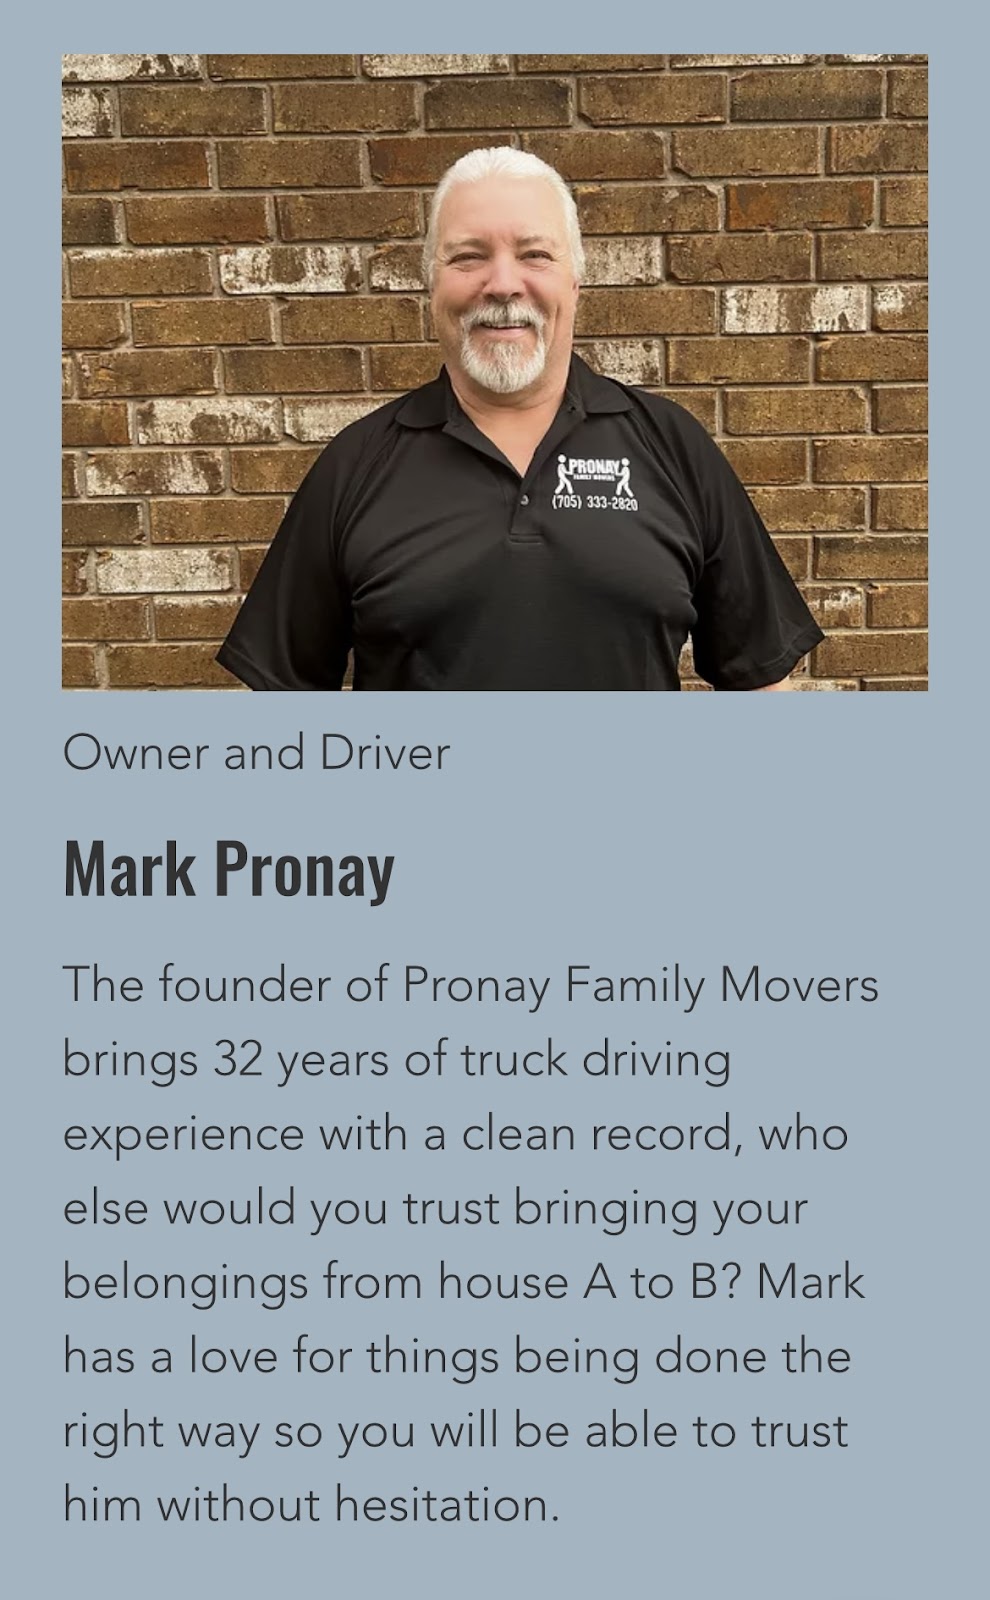 Pronay Family Movers | moving company | 1531 Rankin Way, Innisfil, ON L9S 0C6, Canada | 7053332820 OR +1 705-333-2820